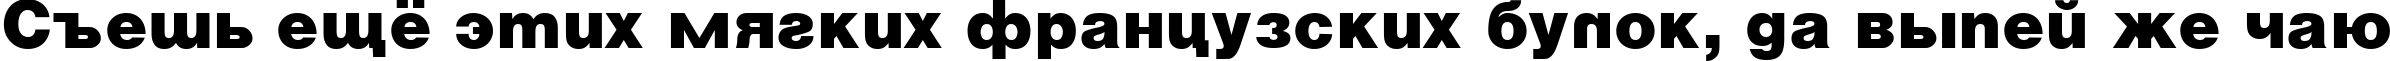 Пример написания шрифтом Vanta Fat Plain:001.001 текста на русском